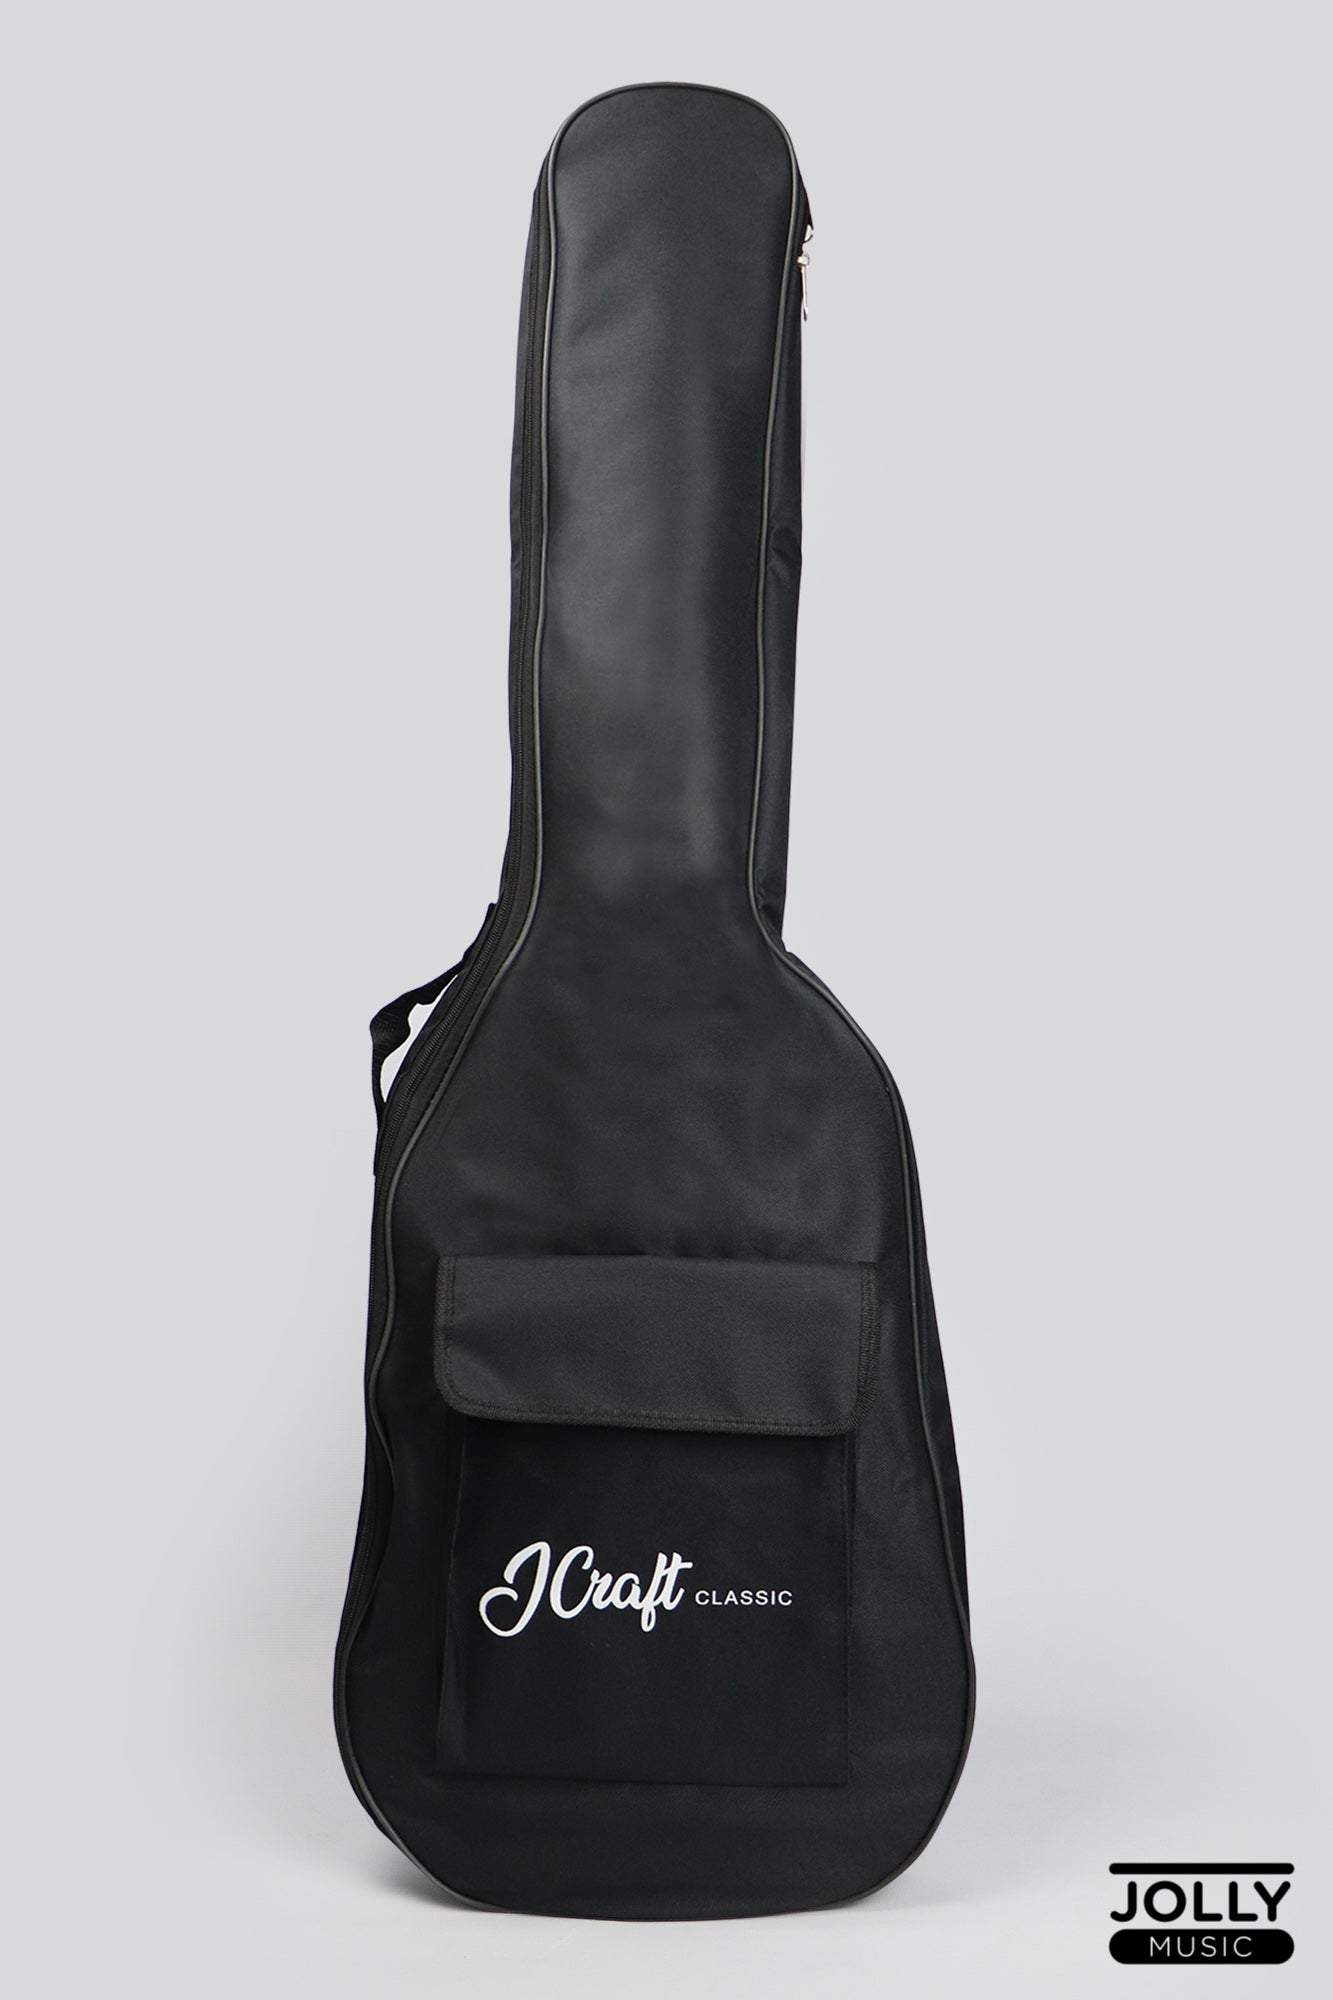 JCraft JB-1 J-Offset 4-String Bass Guitar with Gigbag - Black